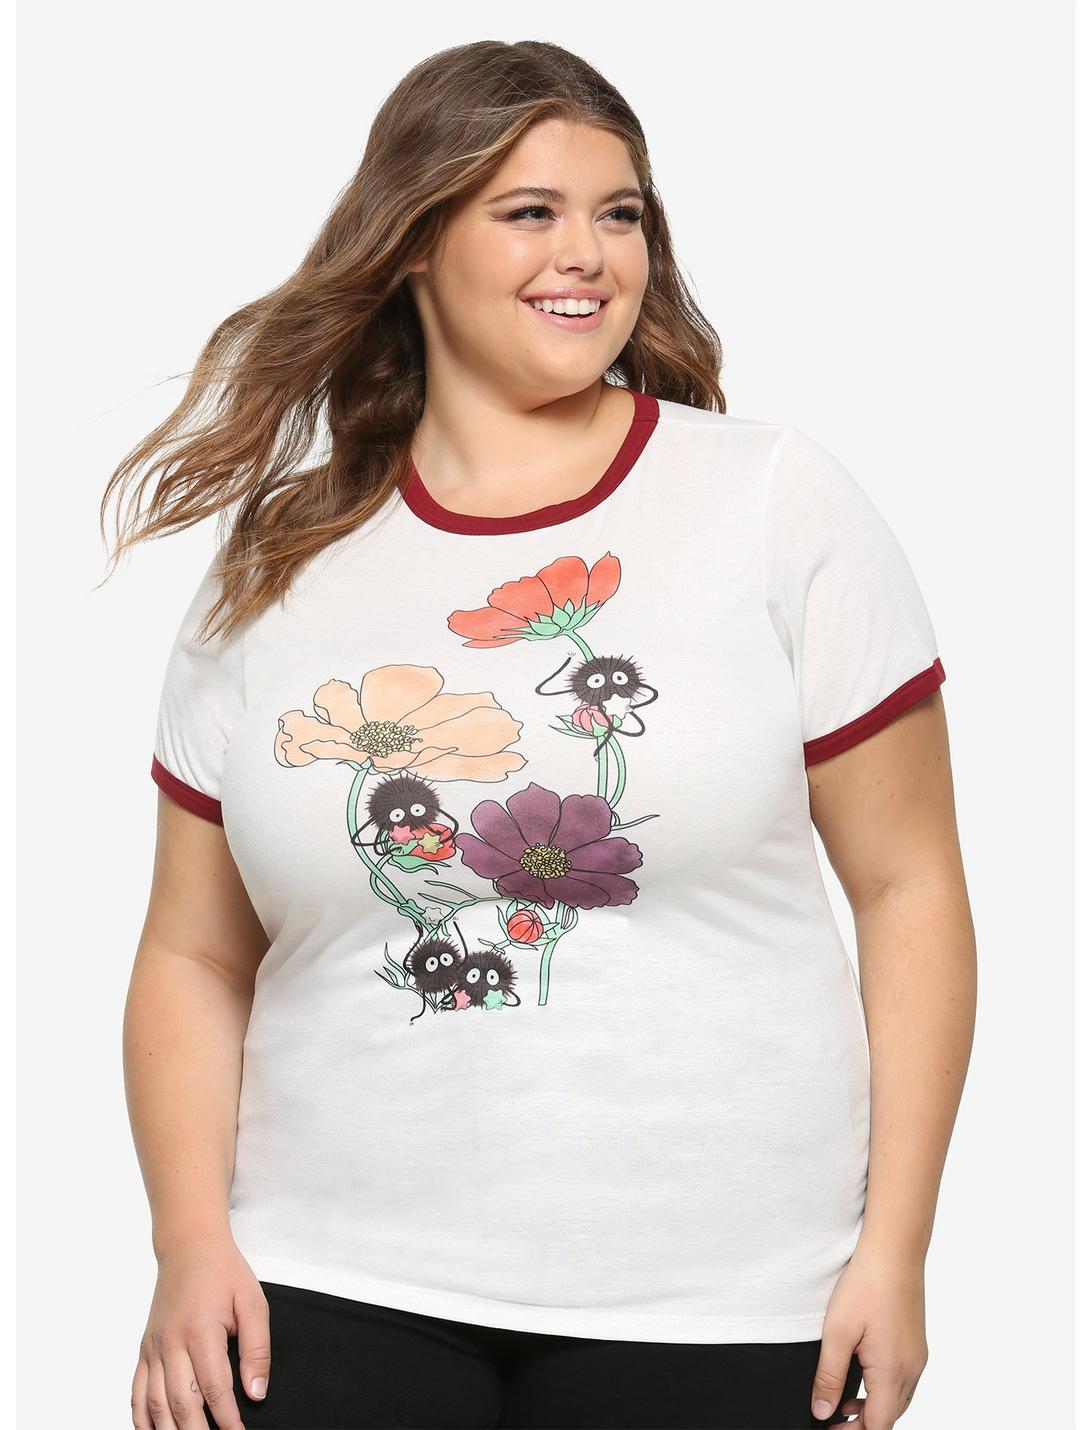 Studio Ghibli Spirited Away Soot Sprites & Flowers Girls Ringer T-Shirt Plus Size, MULTI, hi-res